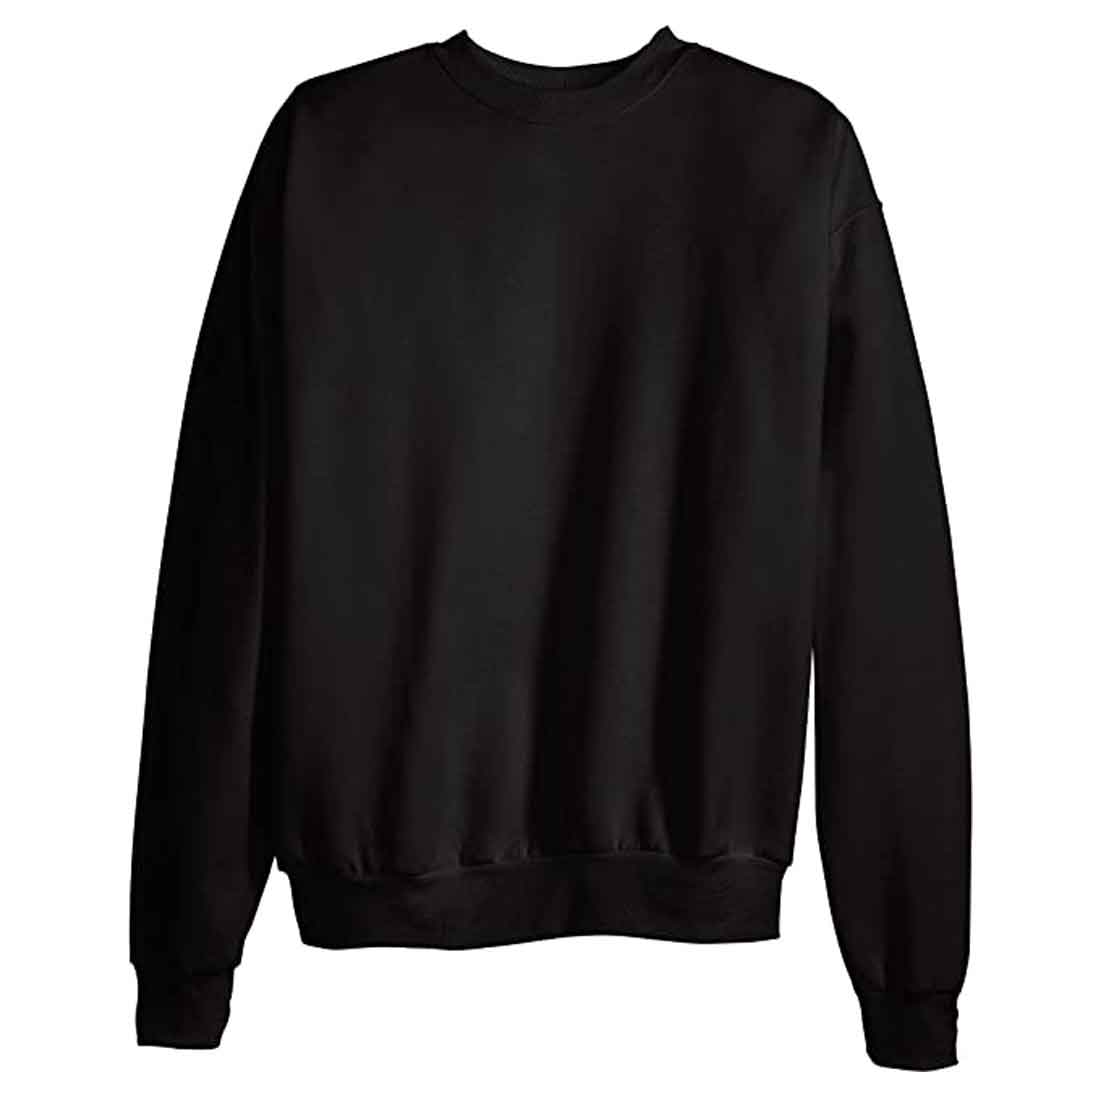 Cool Sweaters Sweatshirt for Mans Stylish Latest - Maratha Warrior